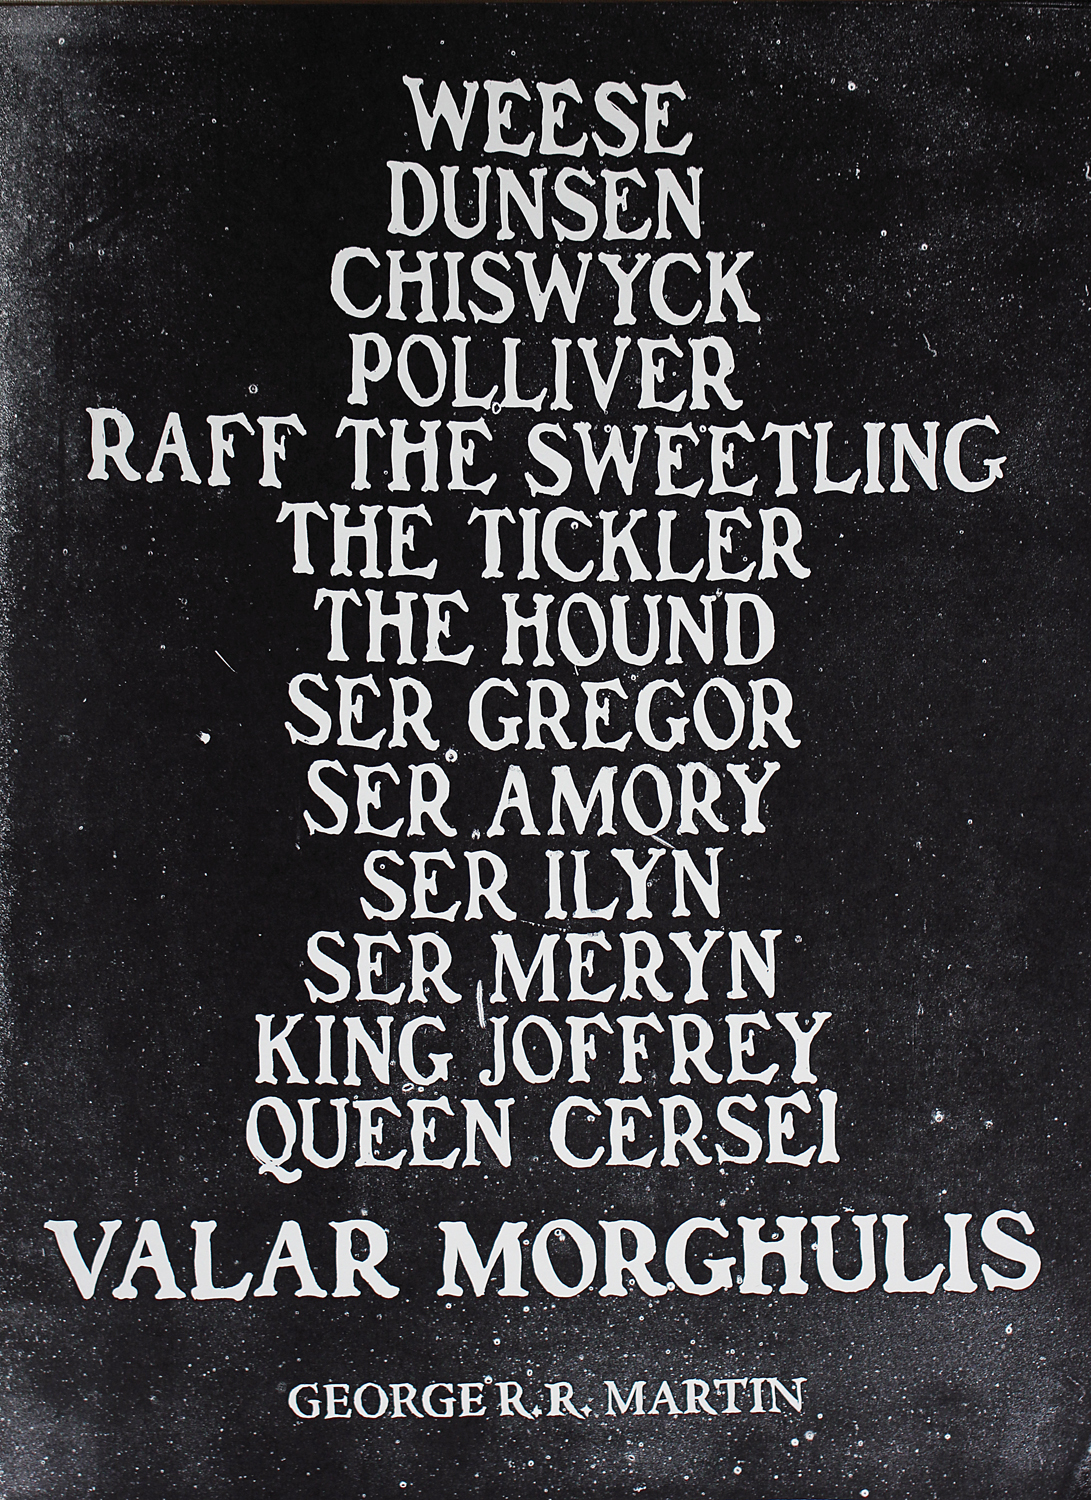 Valar Morghulis Arya S List Poster Astound Me D A Kr Lak